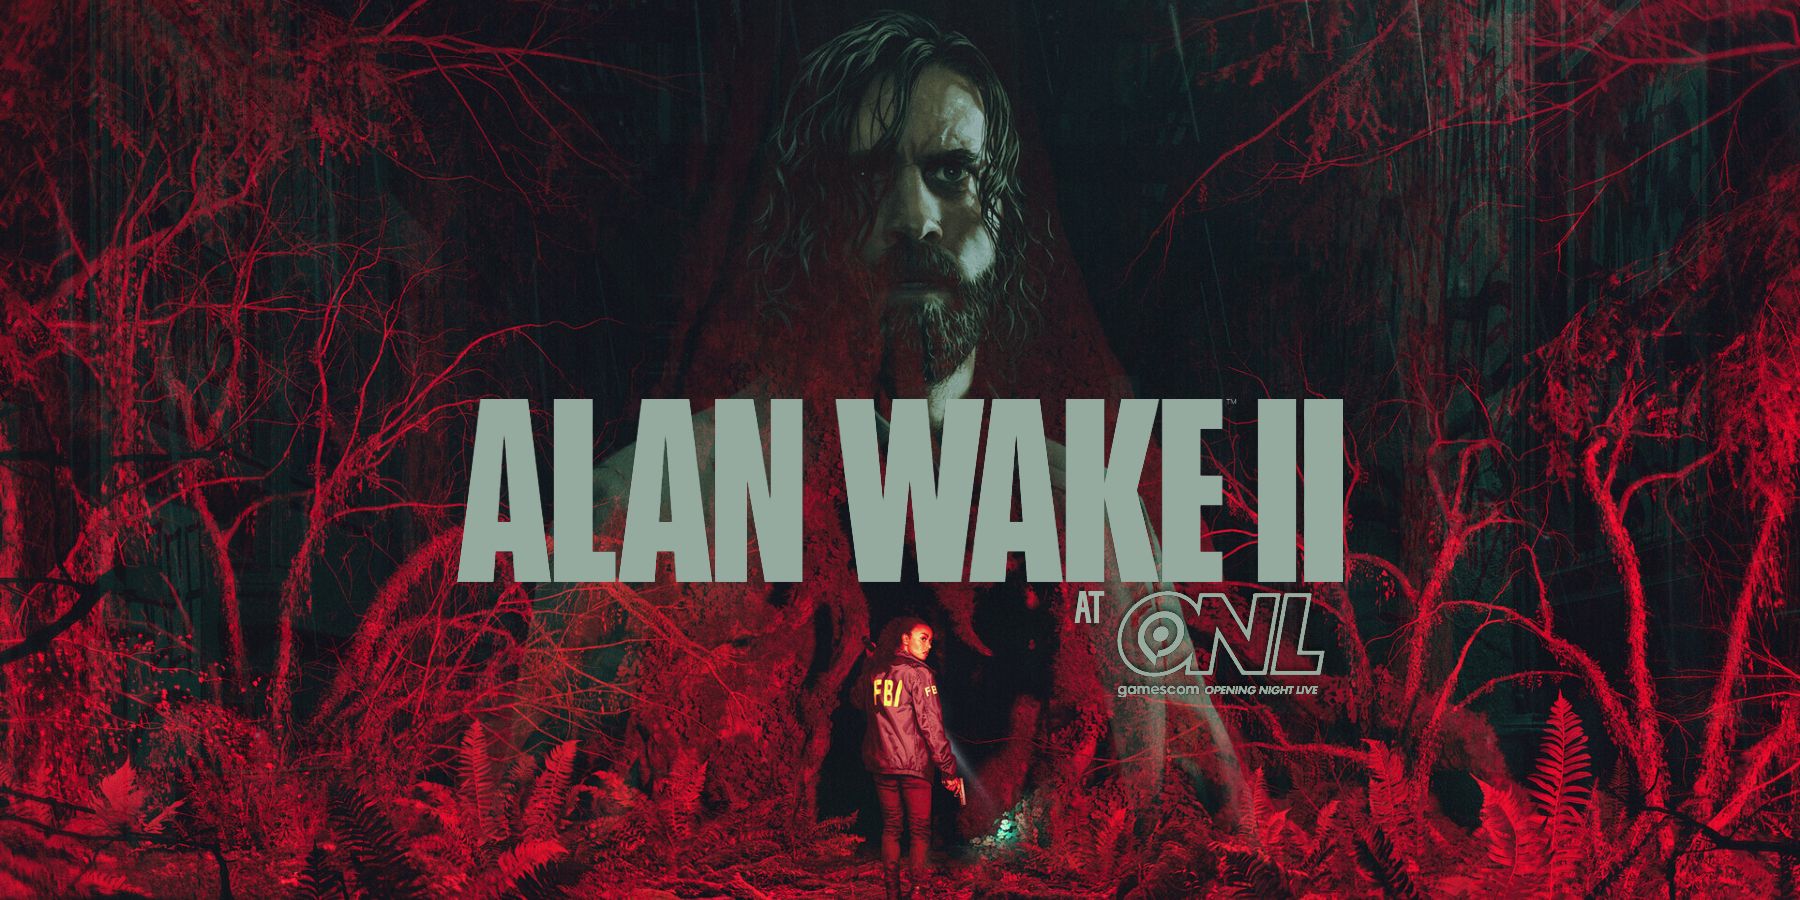 Alan Wake 2 announced, releasing in 2023 - CNET